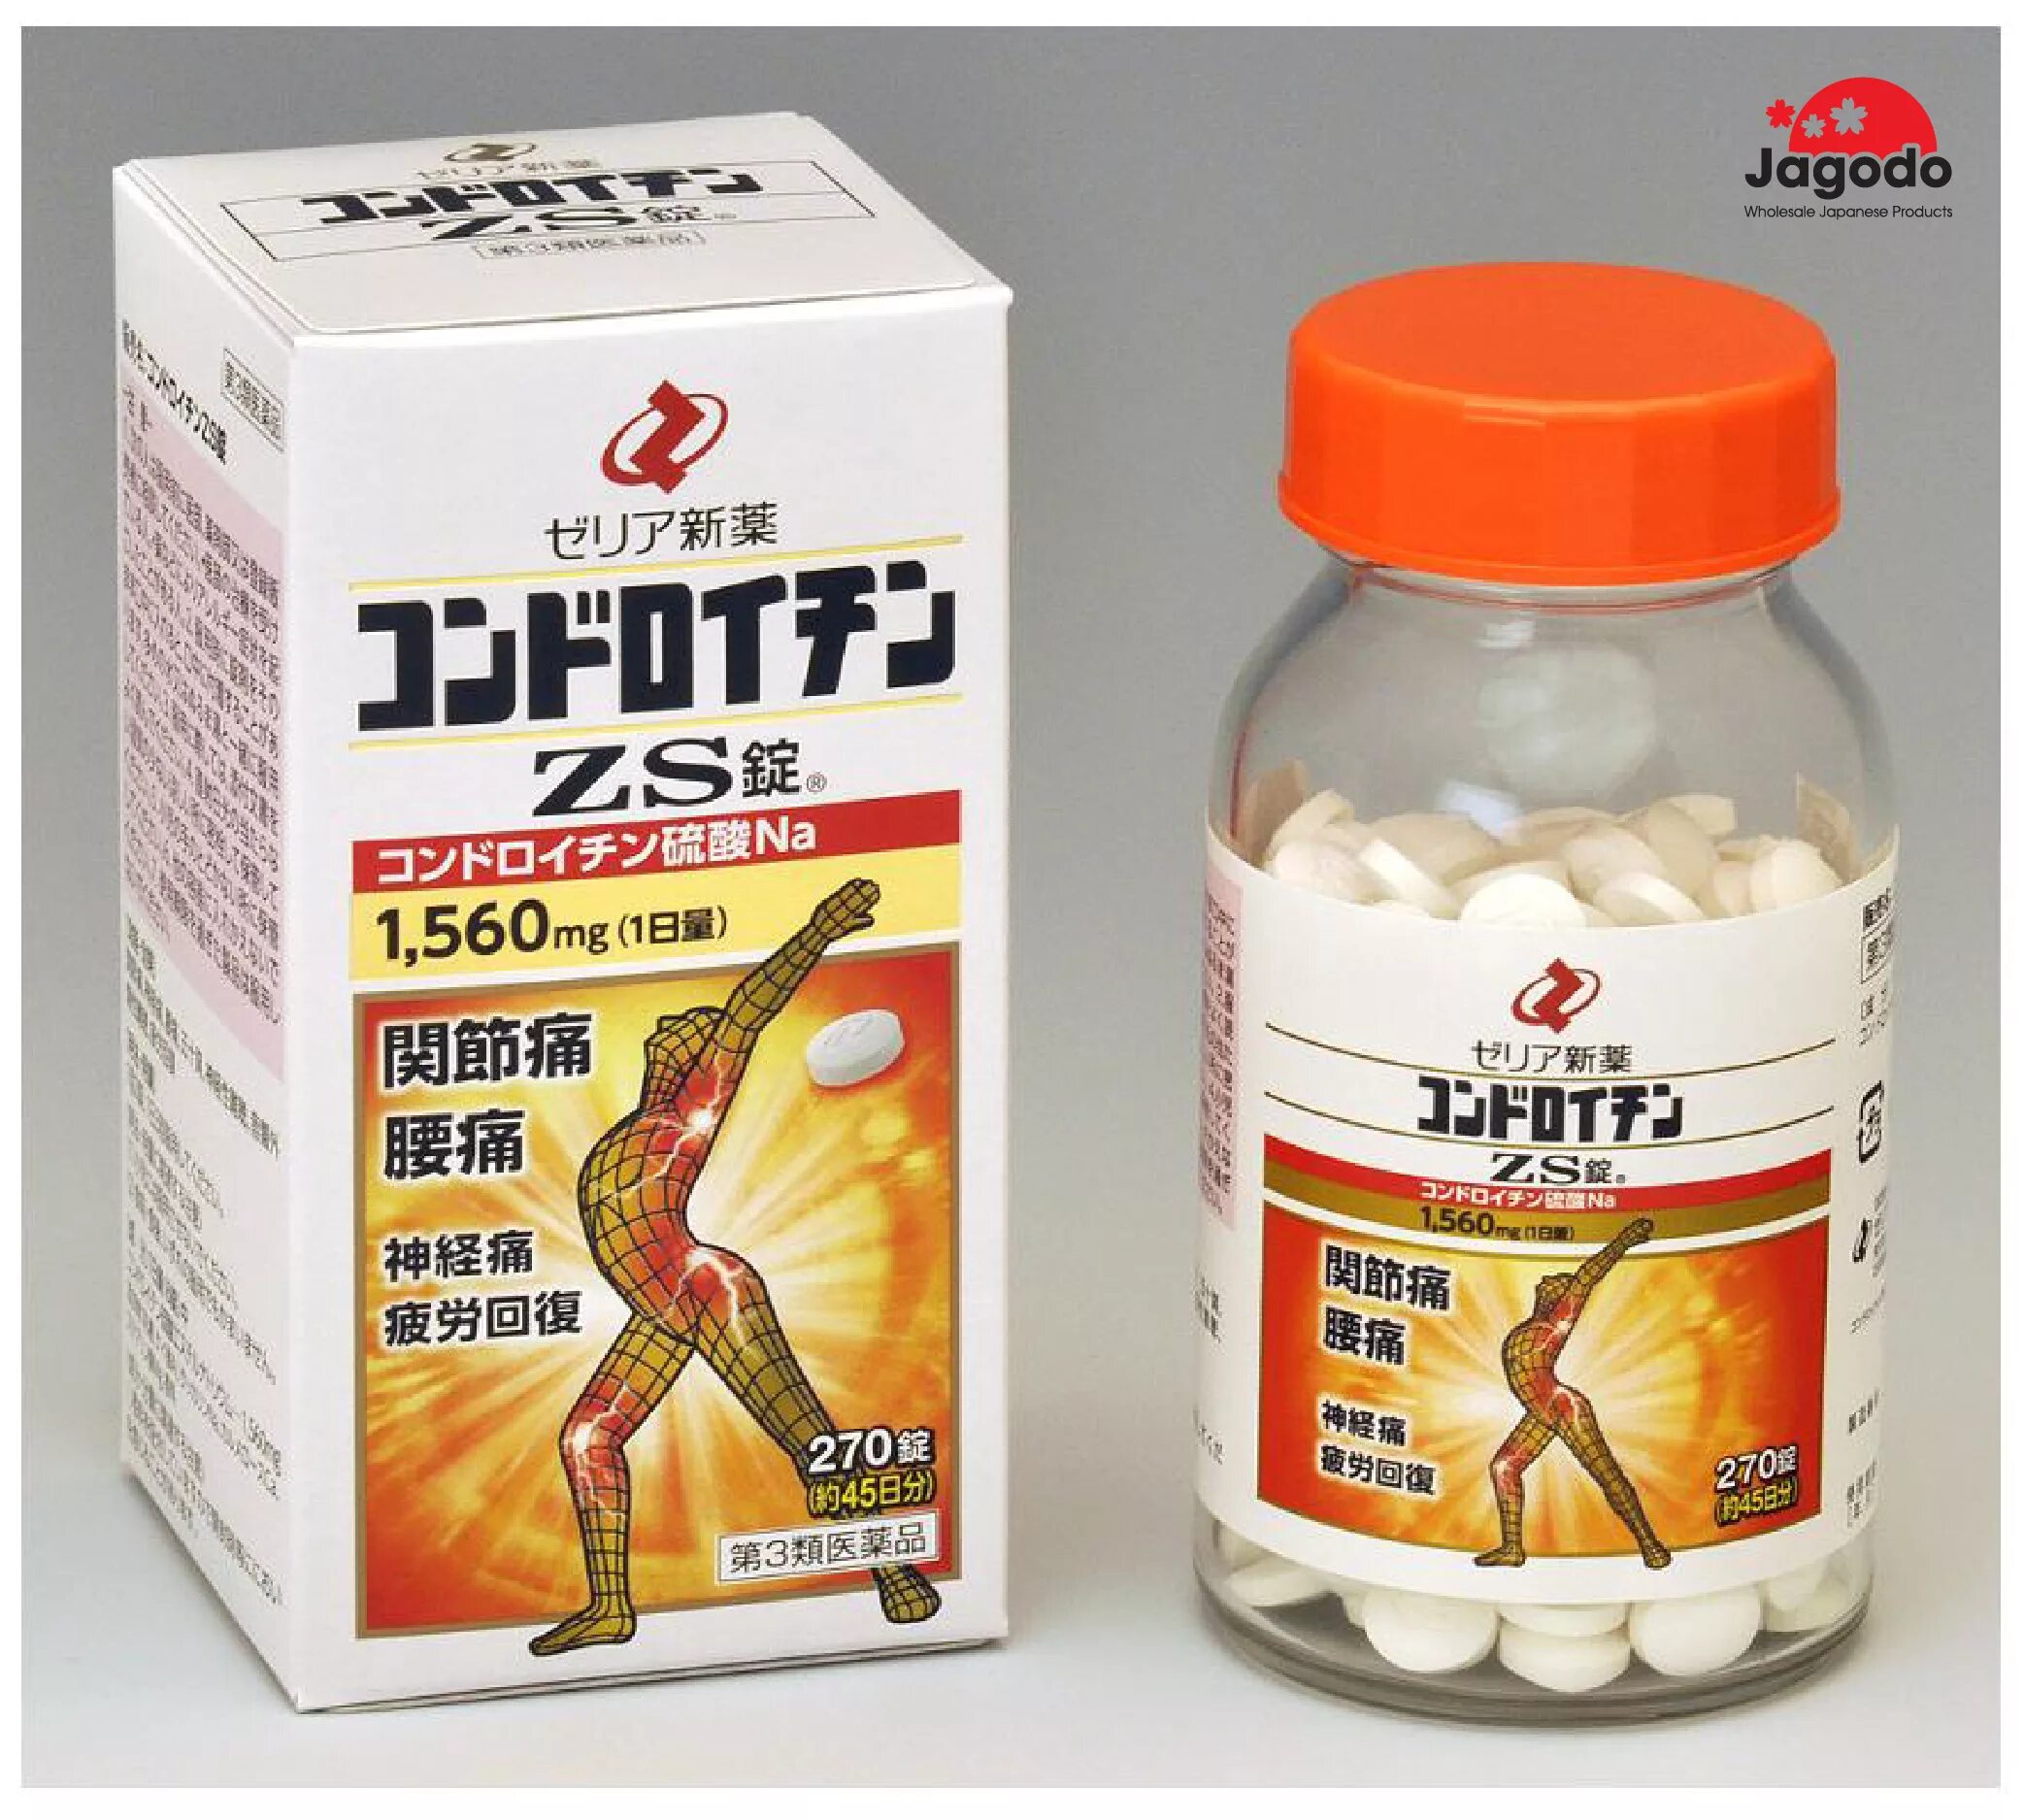 БАД Zeria ультра хондроитин ZS. Ультра хондроитин ZS 270. Хондроитин ZS 270 японский препарат. Японский хондроитин и глюкозамин.